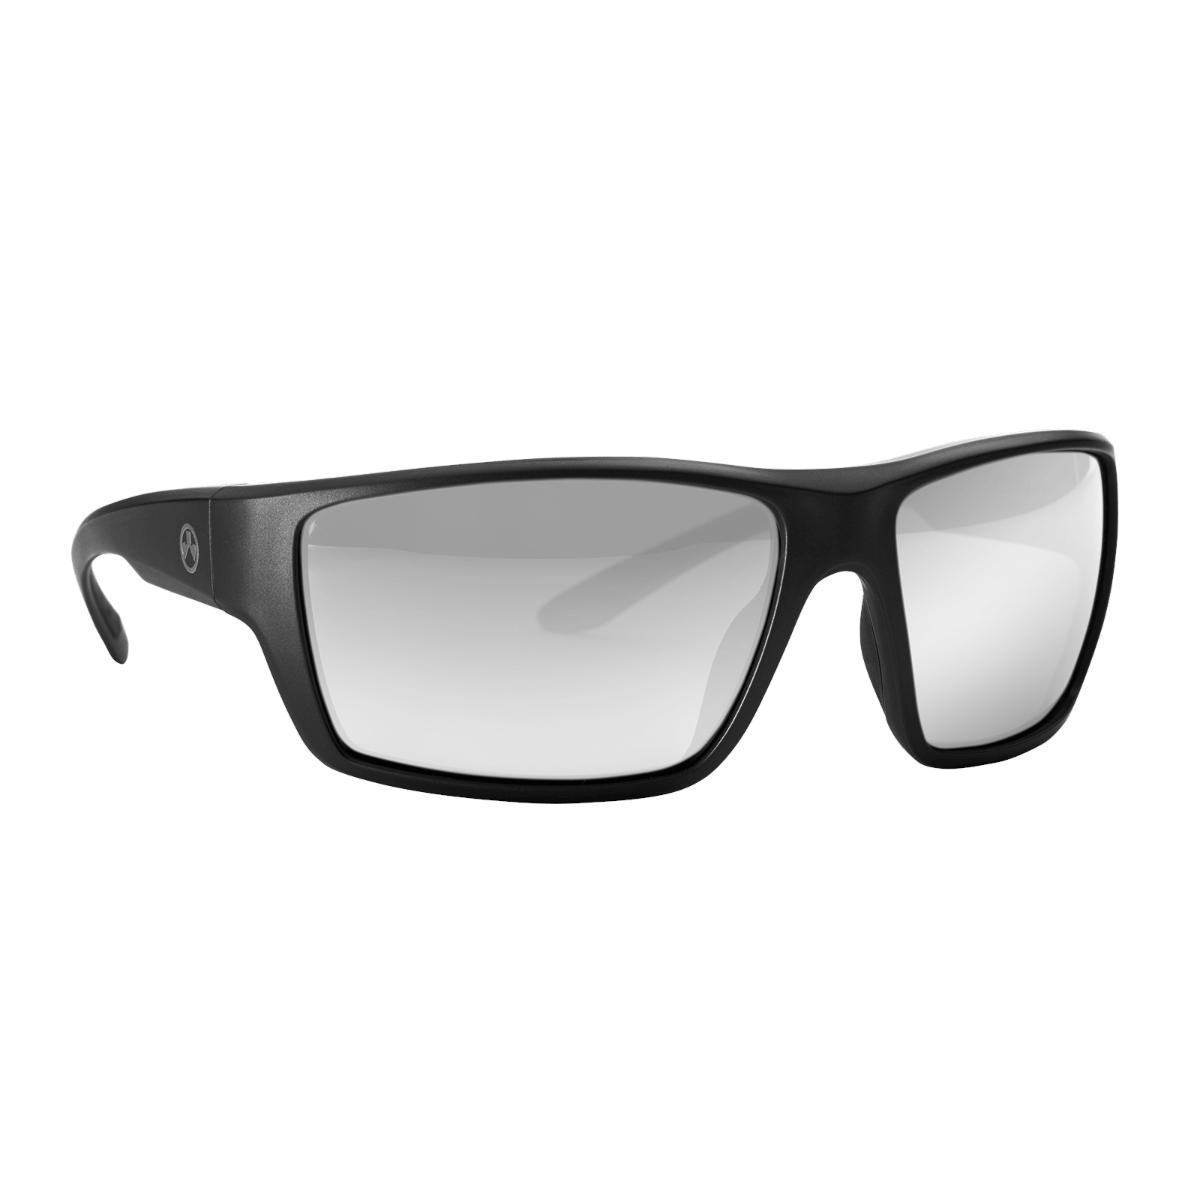 – Gear Polarized Elite Magpul U.S. Terrain Eyewear